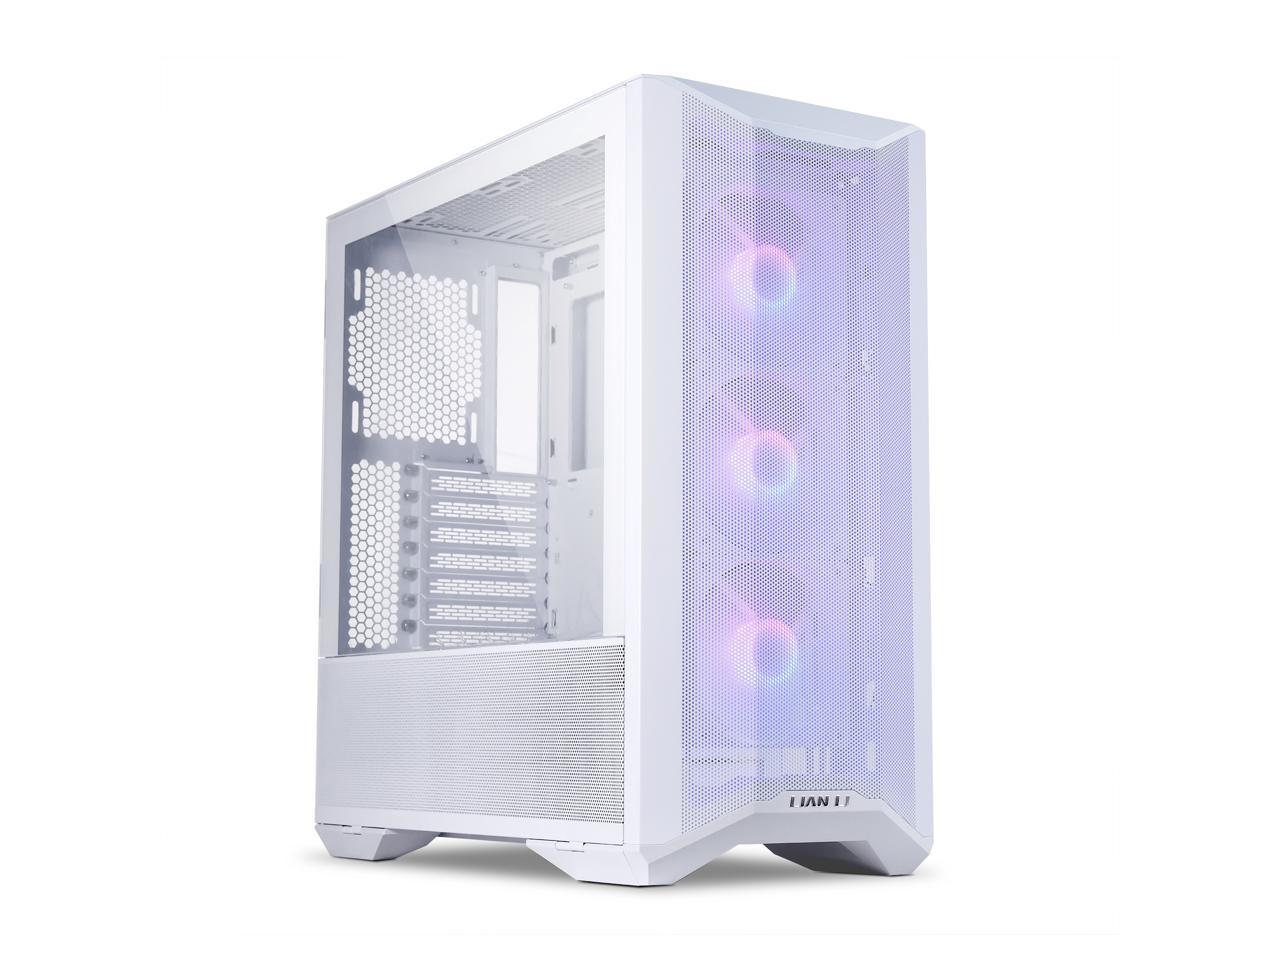 LIAN LI LANCOOL II MESH C RGB SNOW WHITE Tempered Glass ATX Case - White Color, Type C Included - LANCOOL II MESH C RGB-S